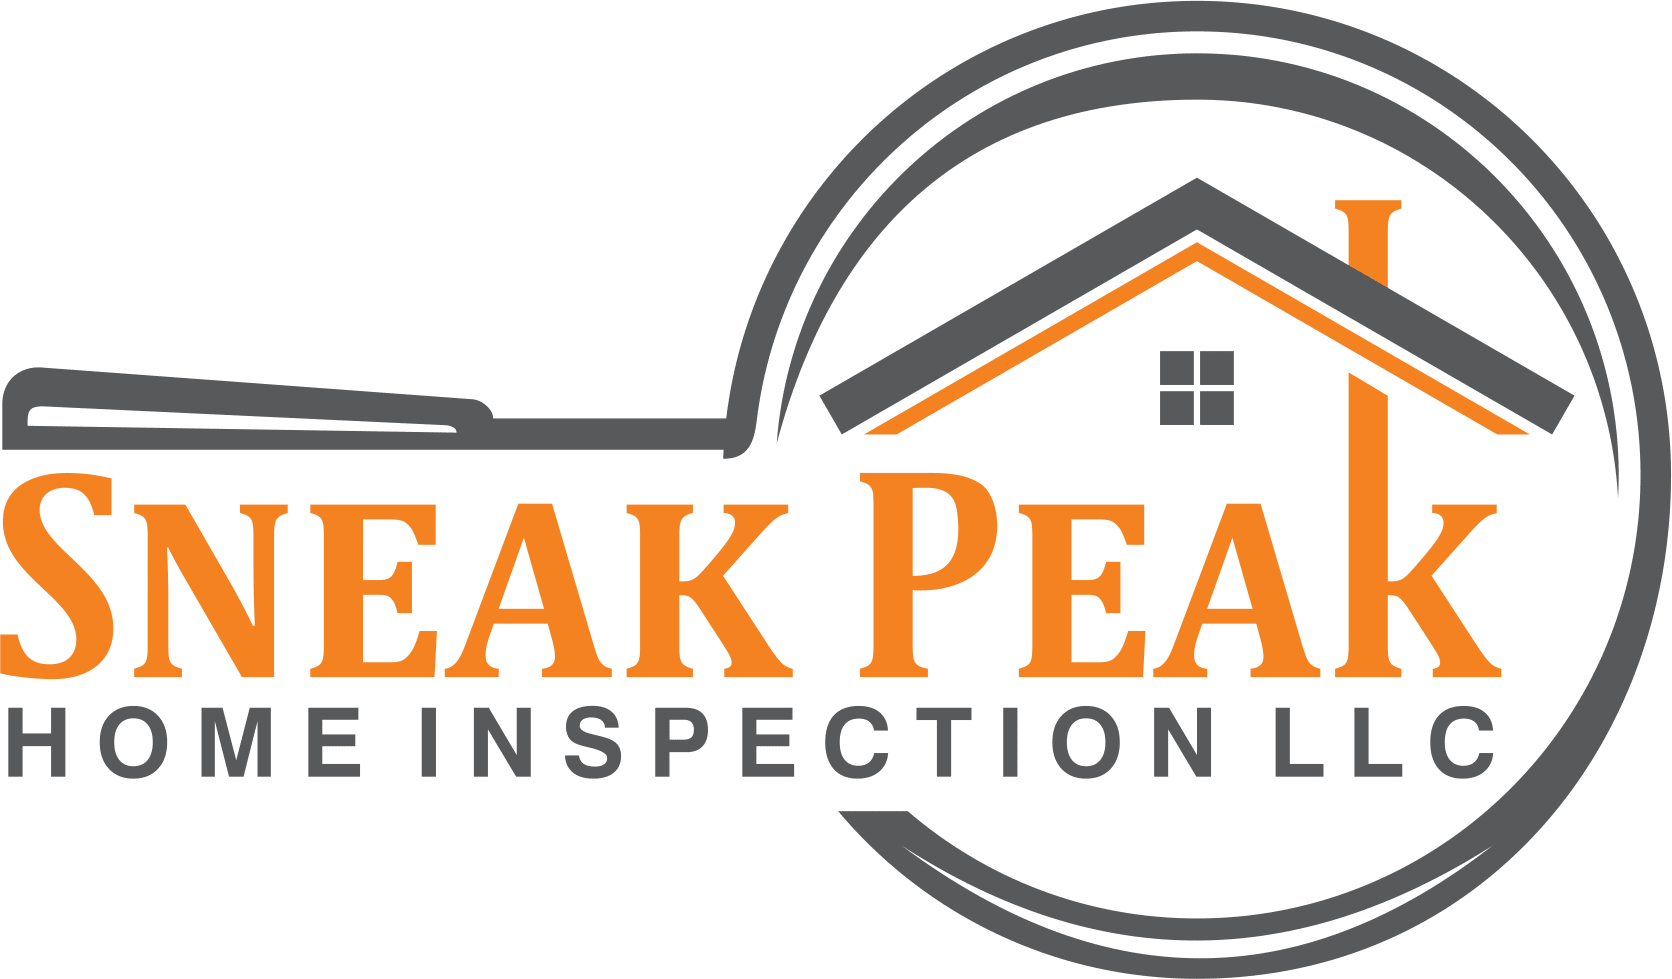 Sneak Peak Home Inspection LLC Logo